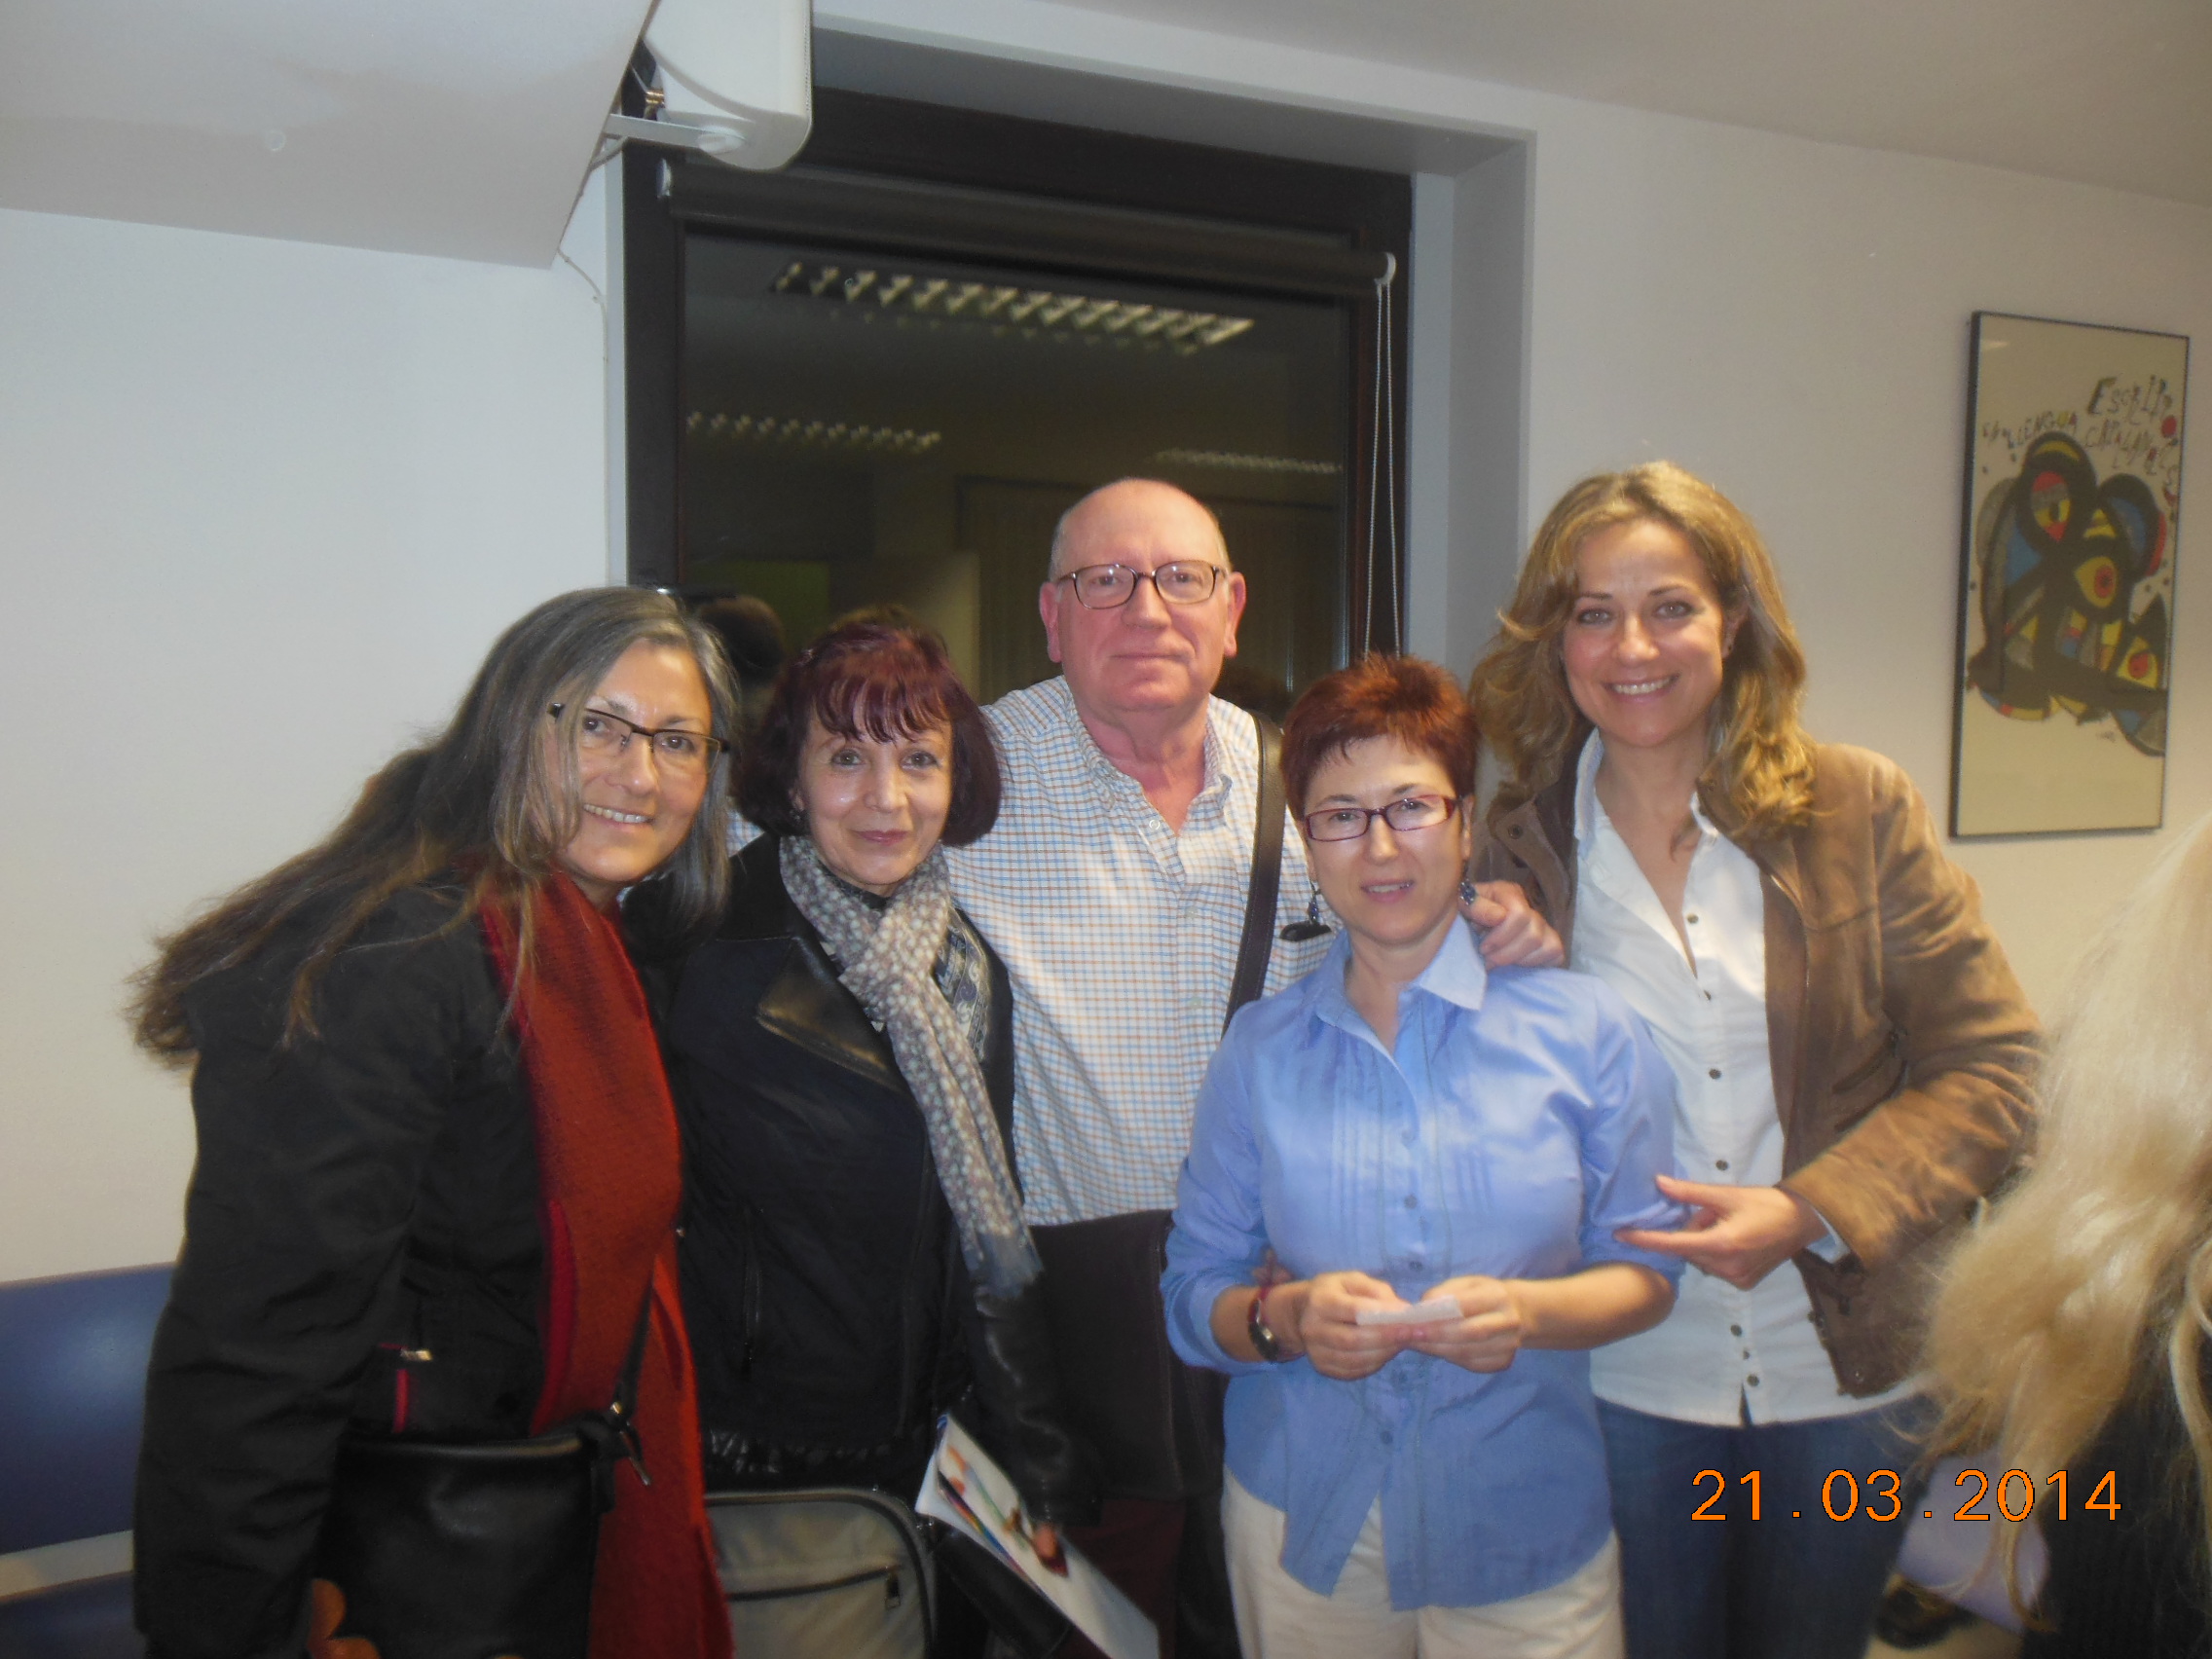 De izquierda a derecha: Anna Rossell, Mª Jesús Vega, Cise Cortés, Felipe Sérvulo y Luisa Gómez Borrell. Tertulia del Laberinto de Ariadna, Ateneo Barcelonés, 2014